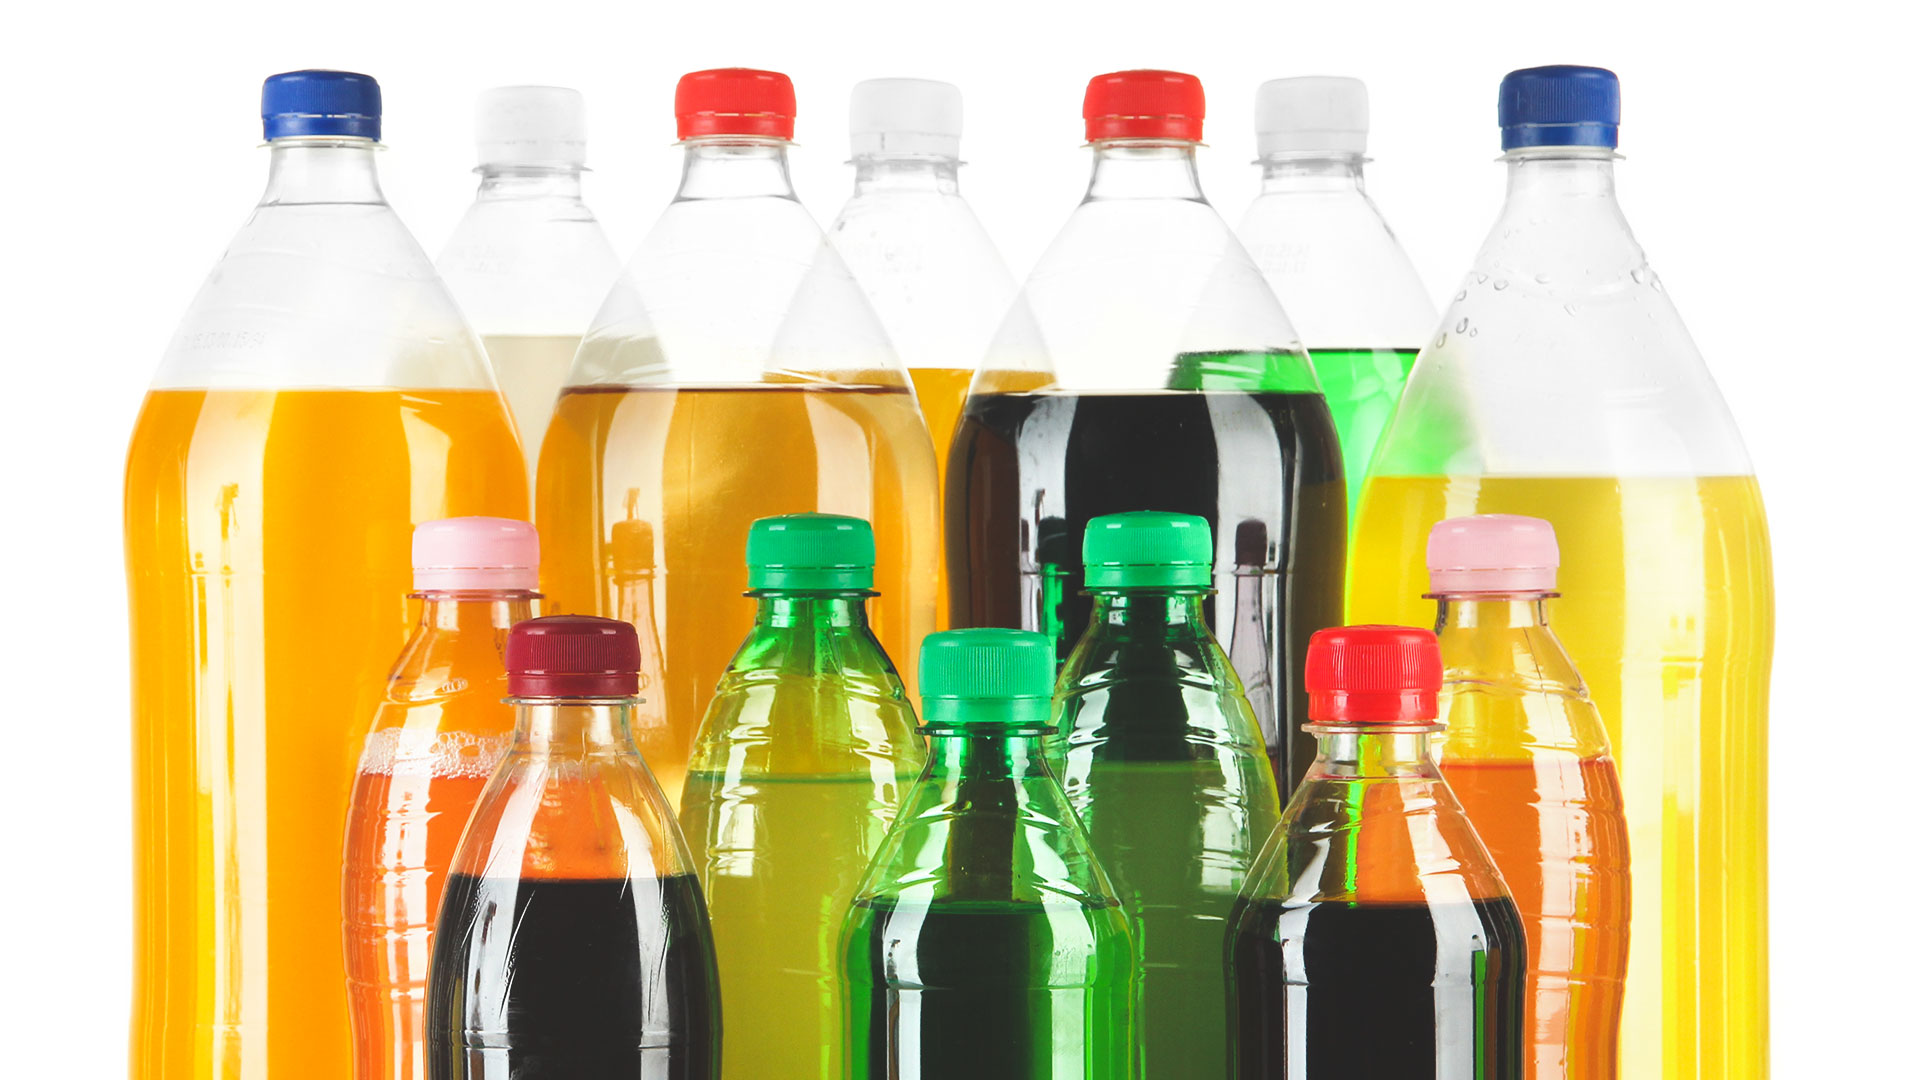 american multi-national food beverage company soda pop bottles